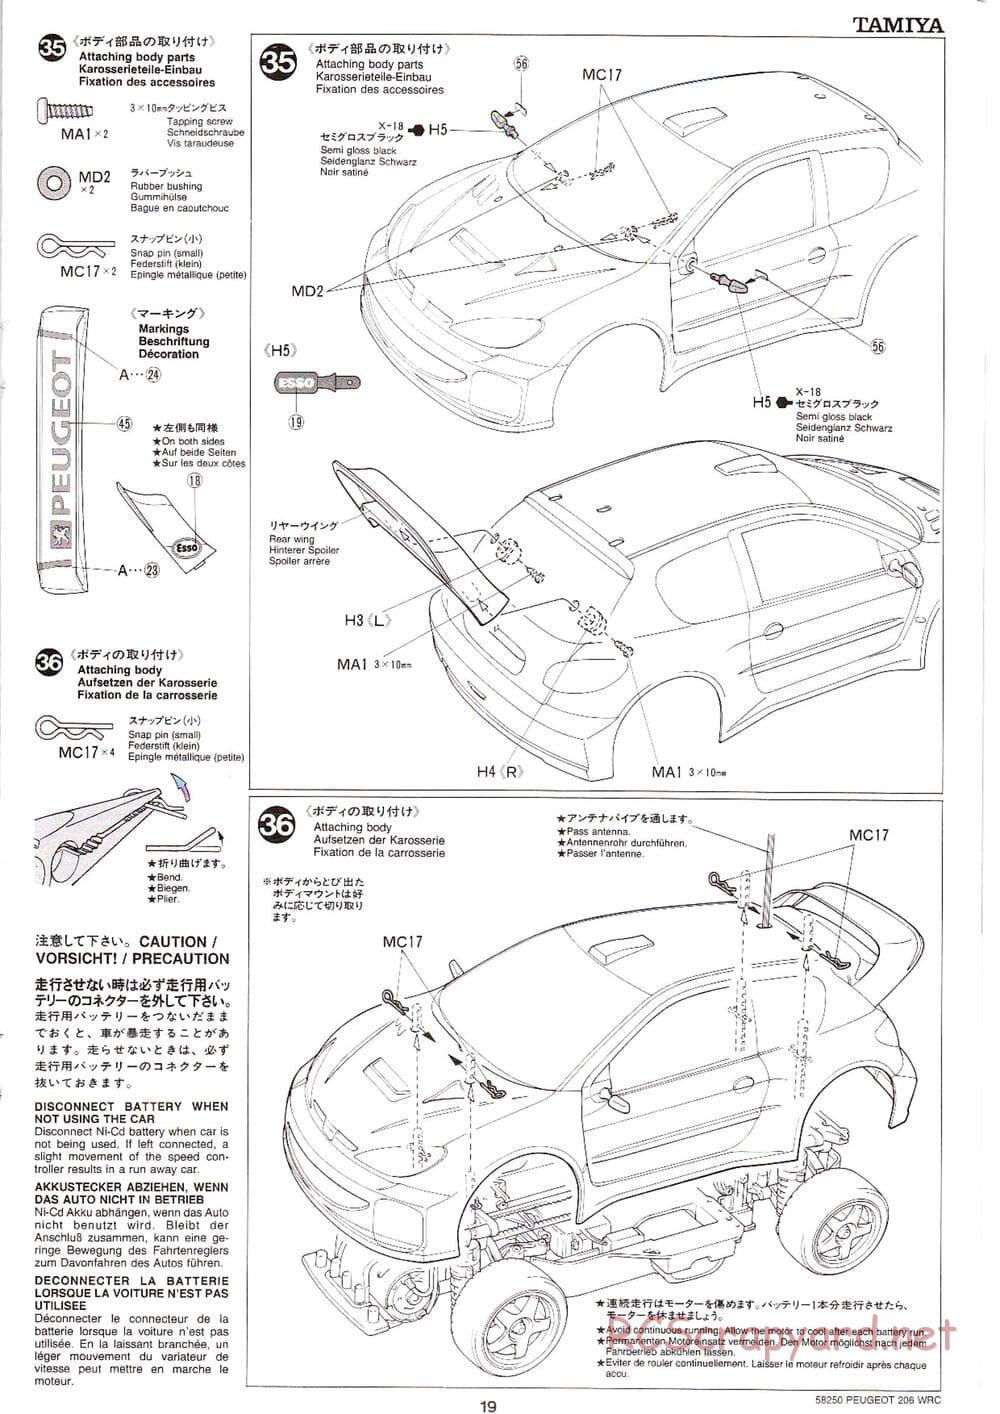 Tamiya - Peugeot 206 WRC - TA-03FS Chassis - Manual - Page 19